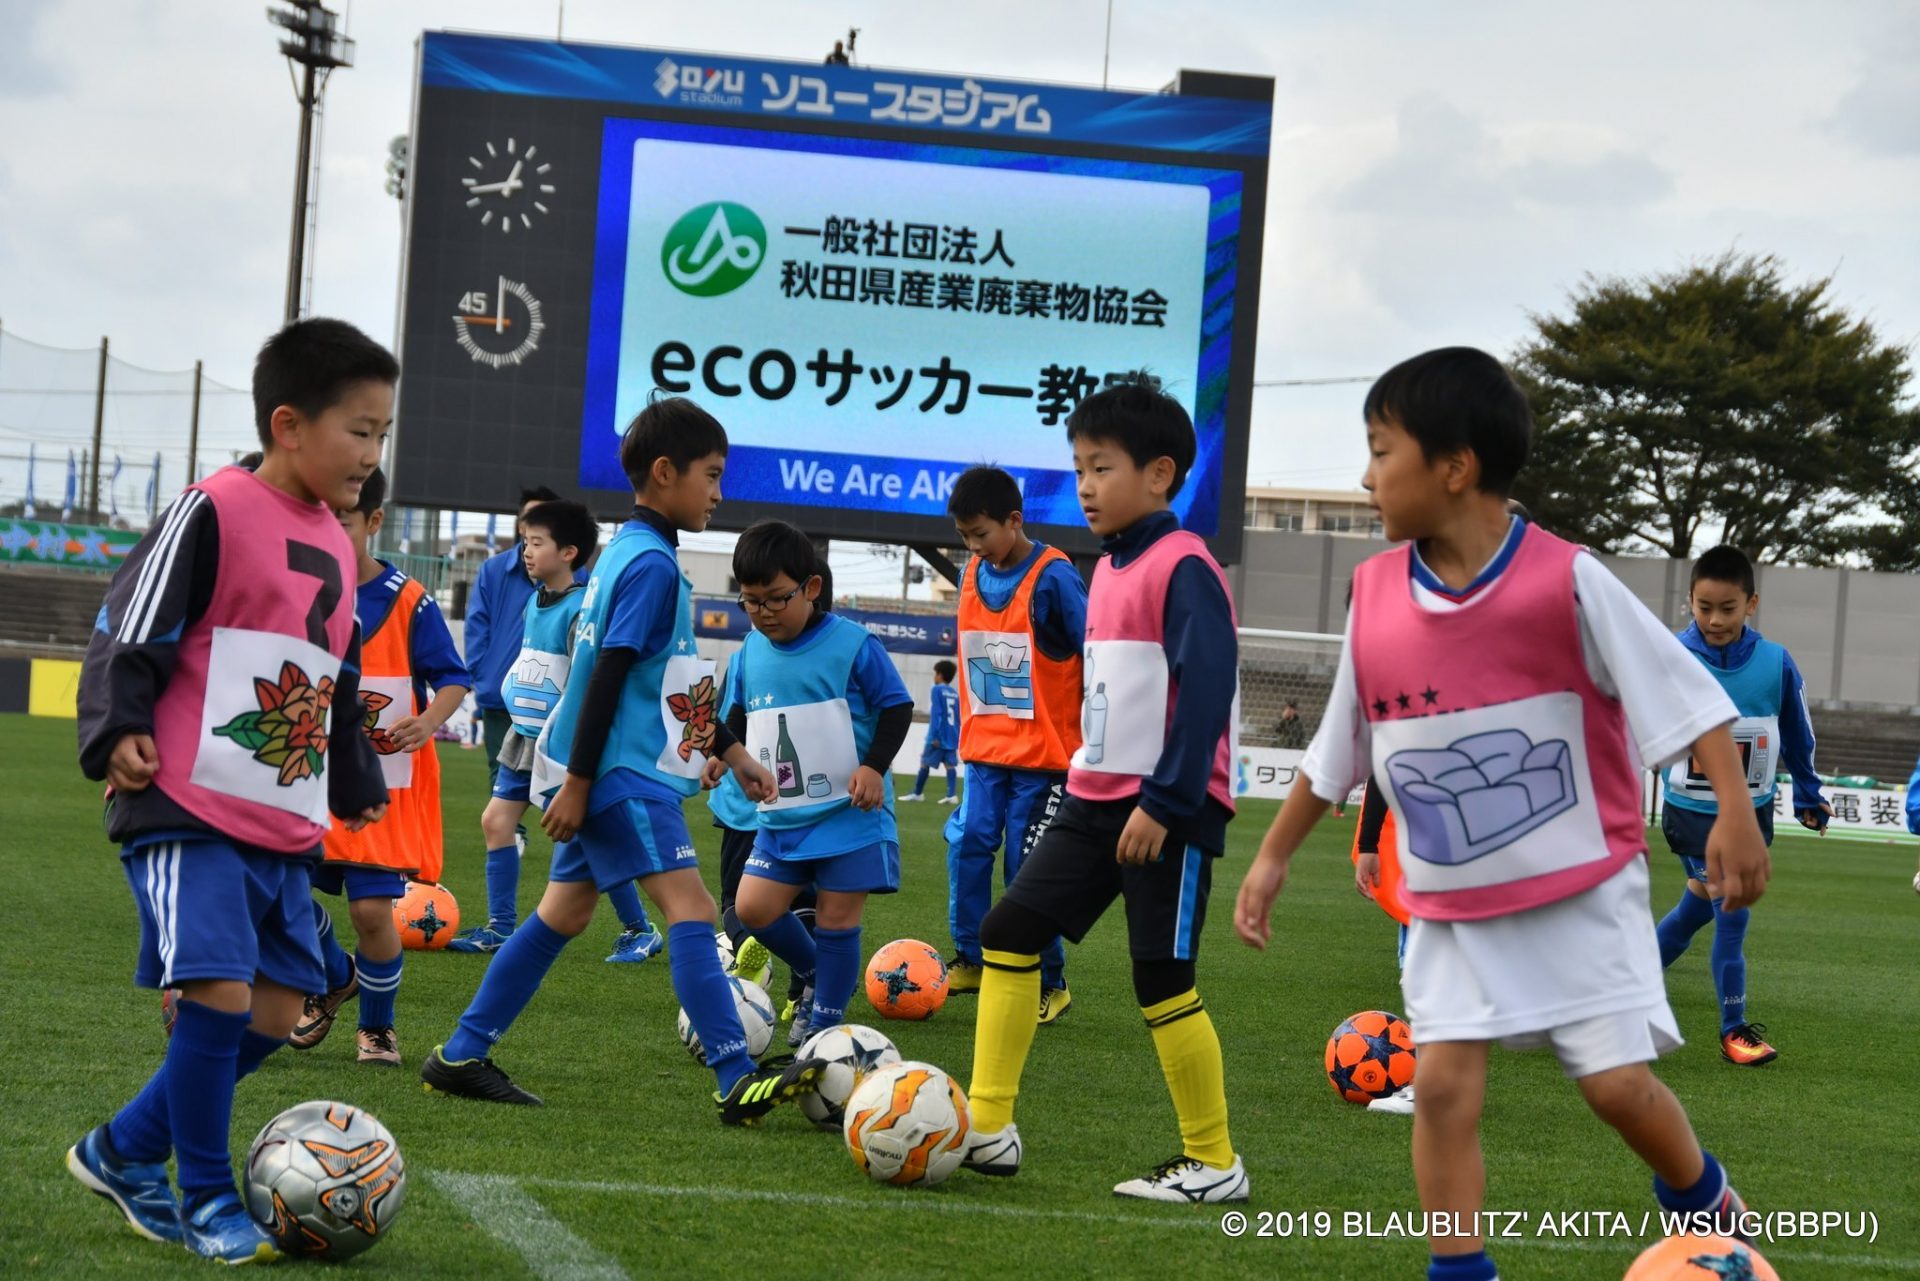 3 28 J2ホームゲーム開幕戦 Ecoサッカー教室 参加者募集のお知らせ ブラウブリッツ秋田